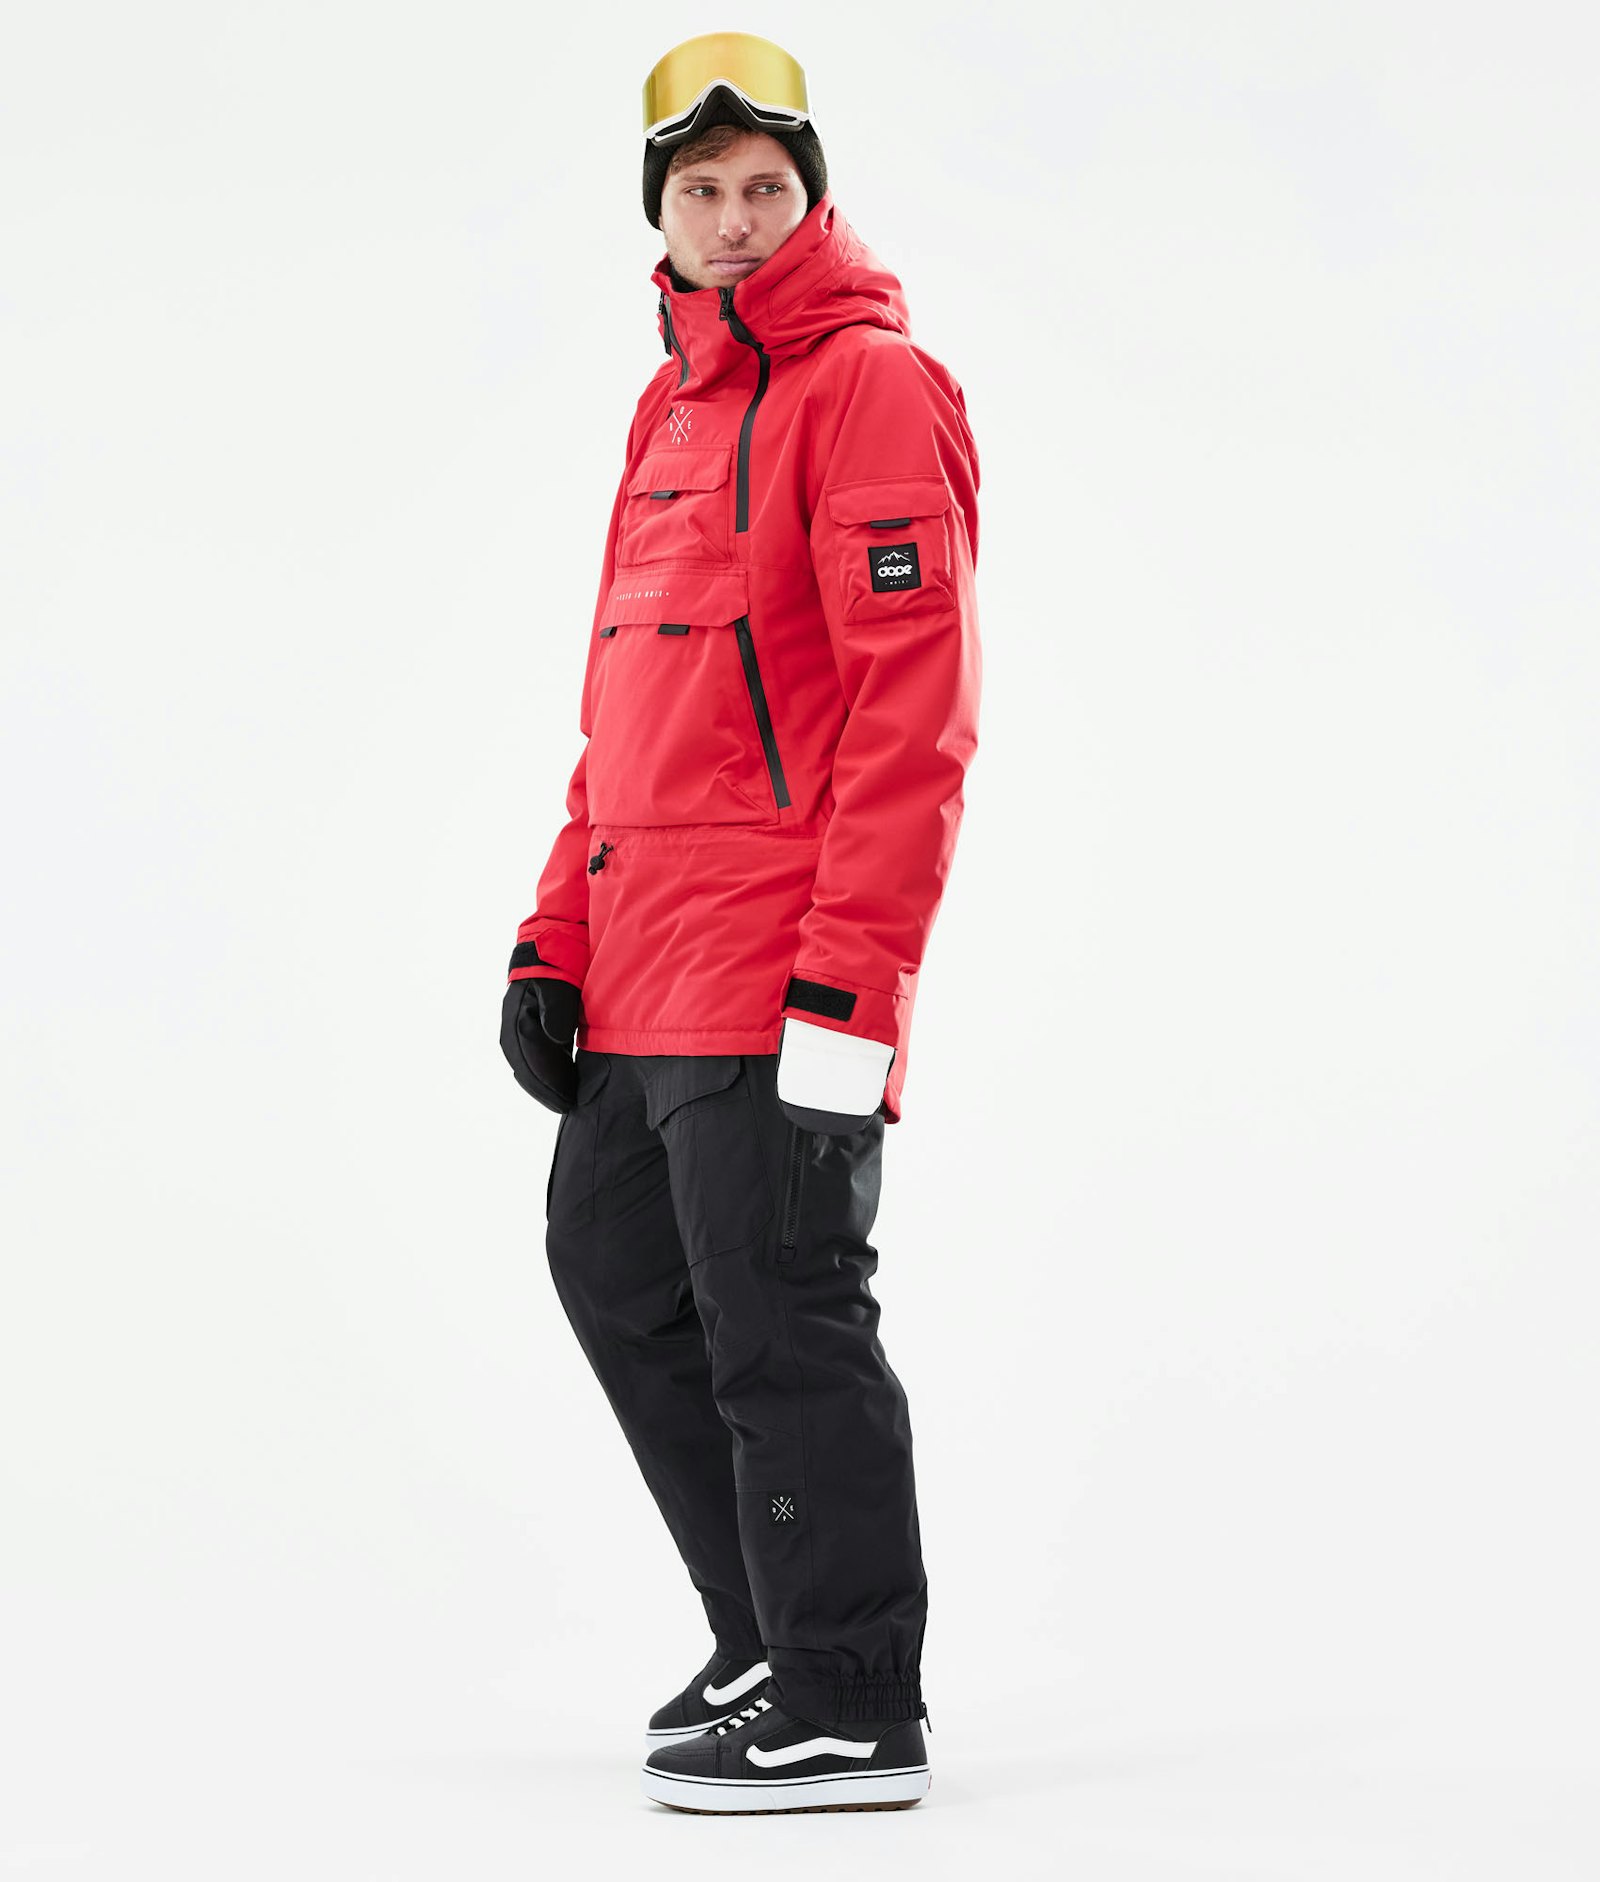 Dope Akin 2020 Snowboard Jacket Men Red Renewed